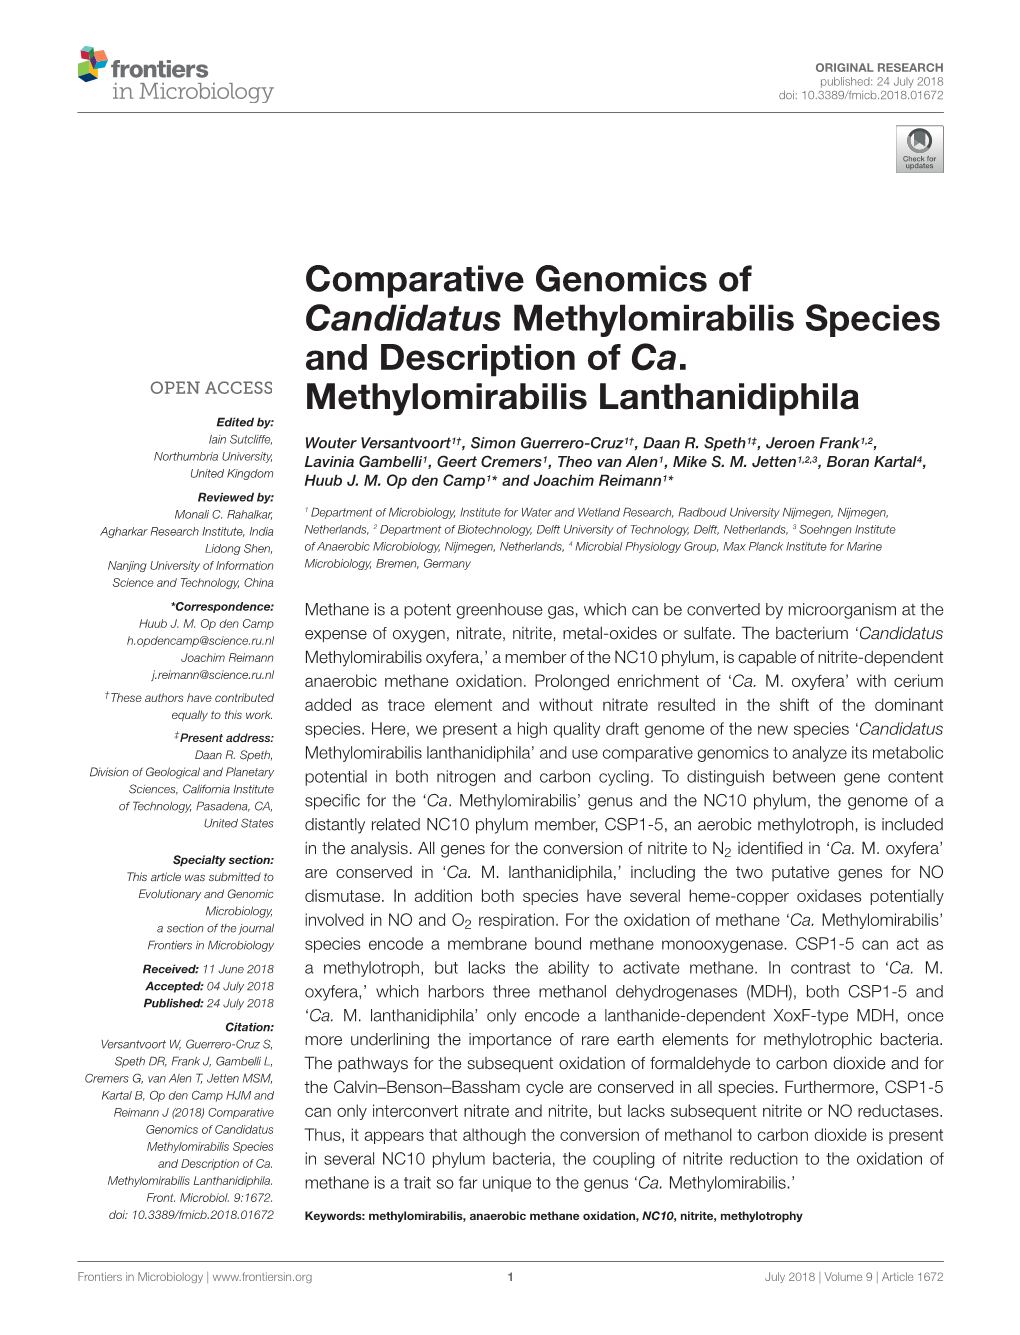 Comparative Genomics of Candidatus Methylomirabilis Species and Description of Ca. Methylomirabilis Lanthanidiphila